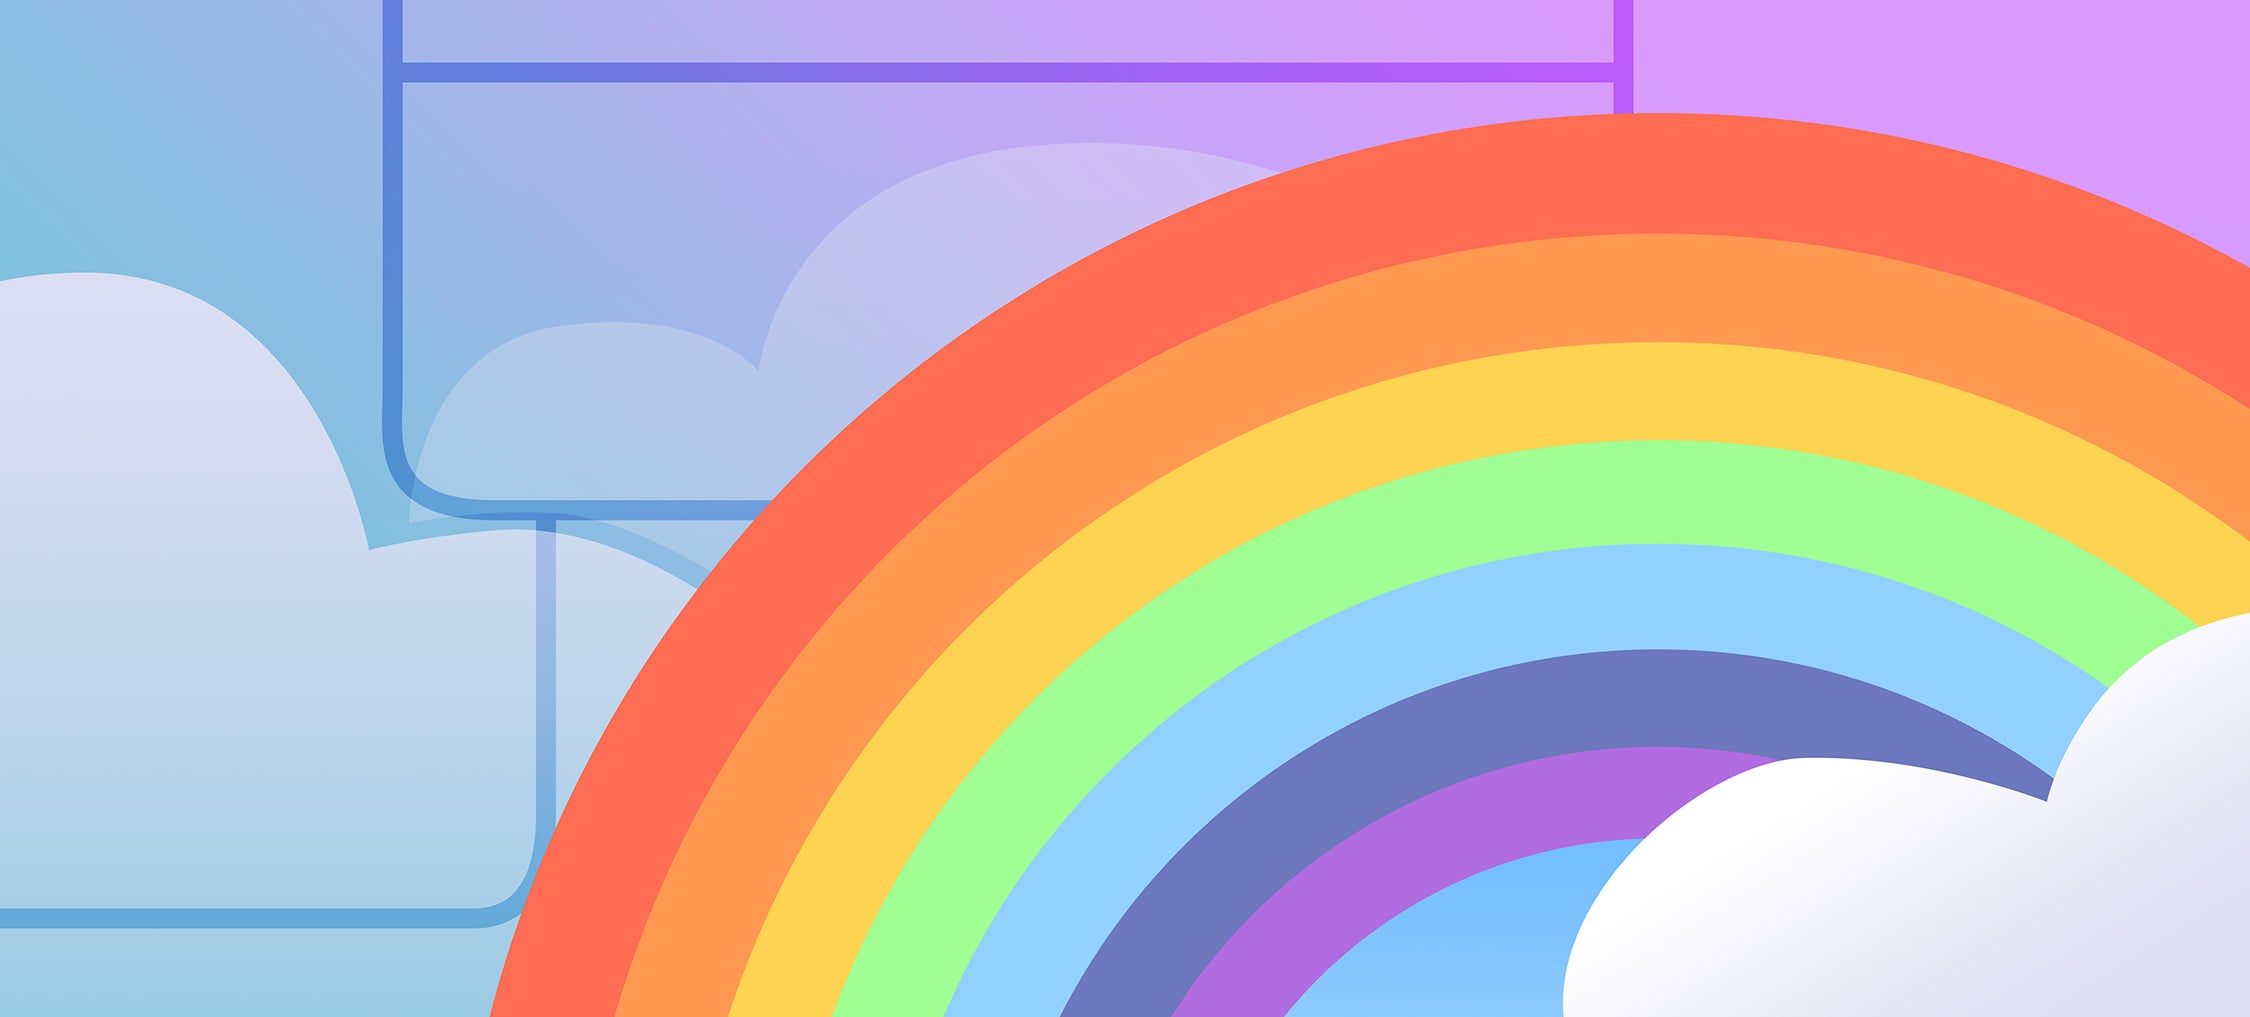 A minimalist image of a rainbow.